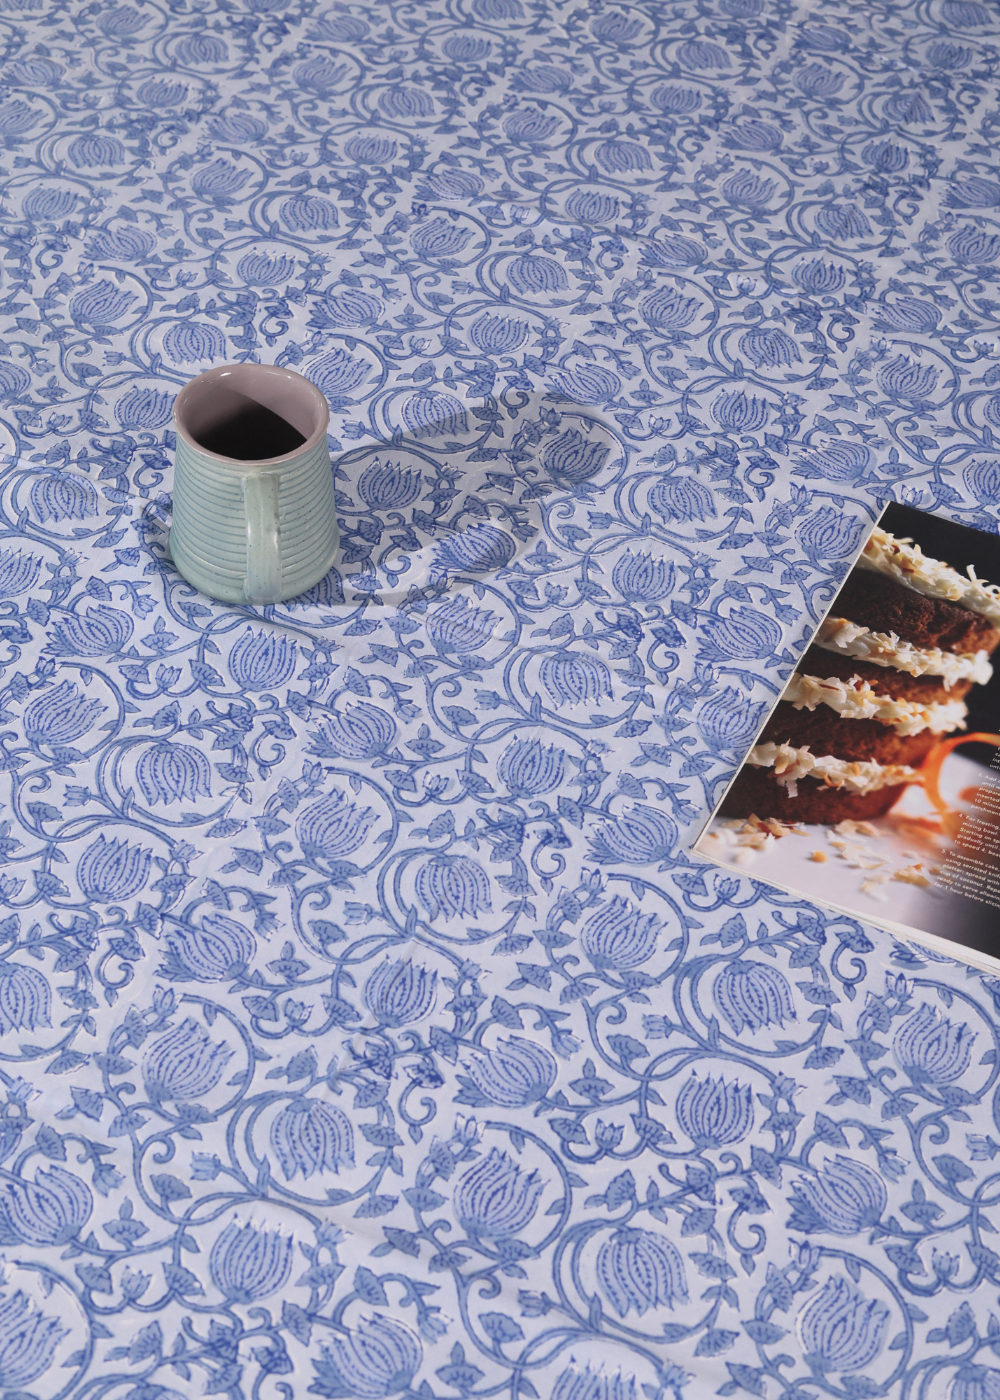 A mug and magazine on a blue lotus bedsheet